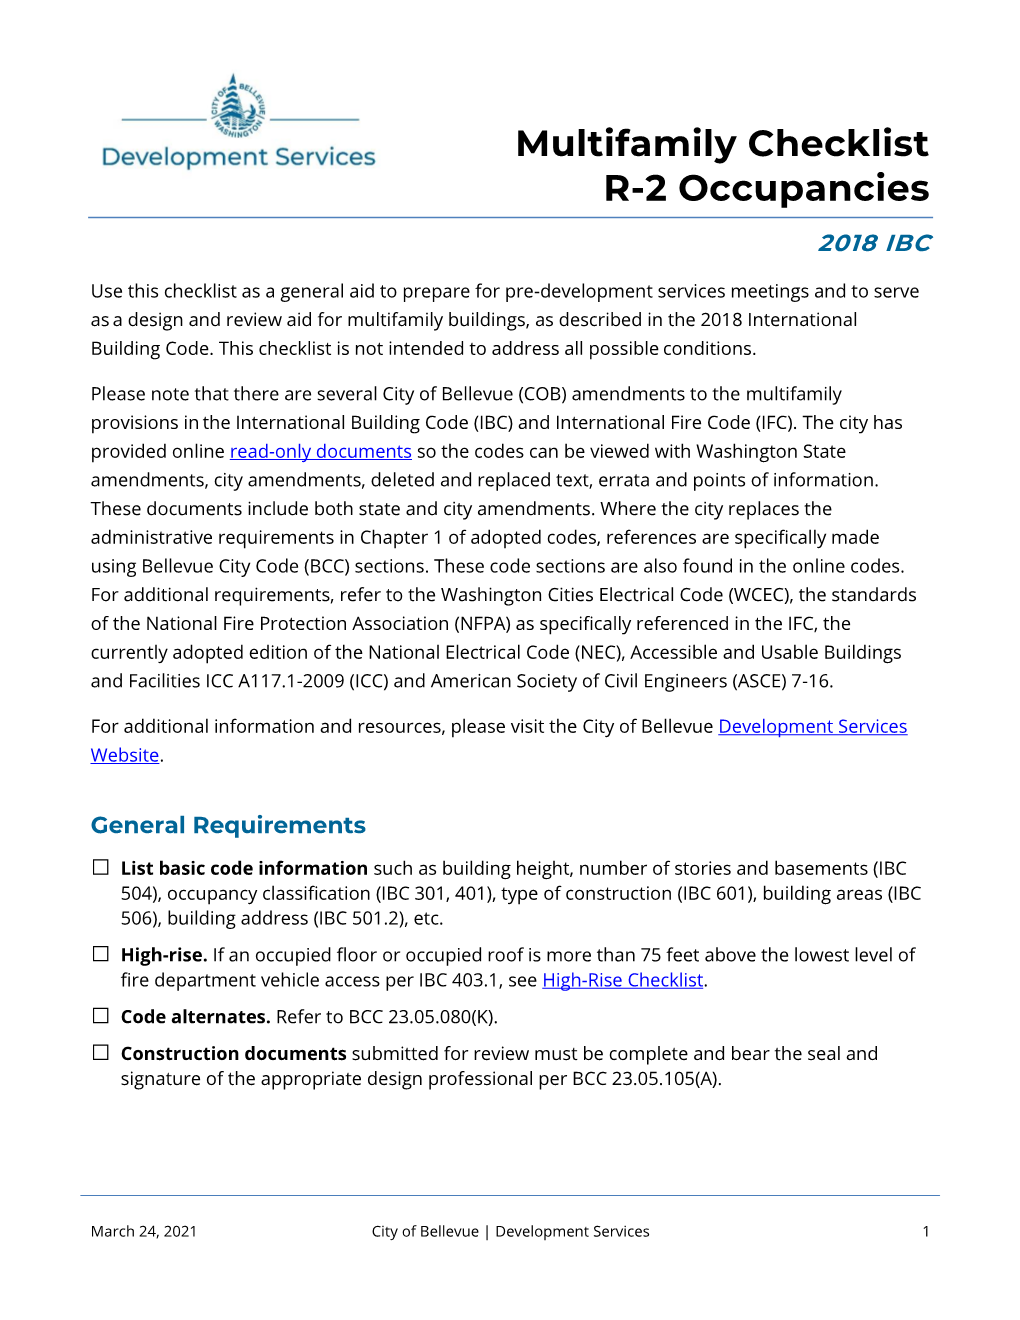 Multifamily Checklist R-2 Occupancies